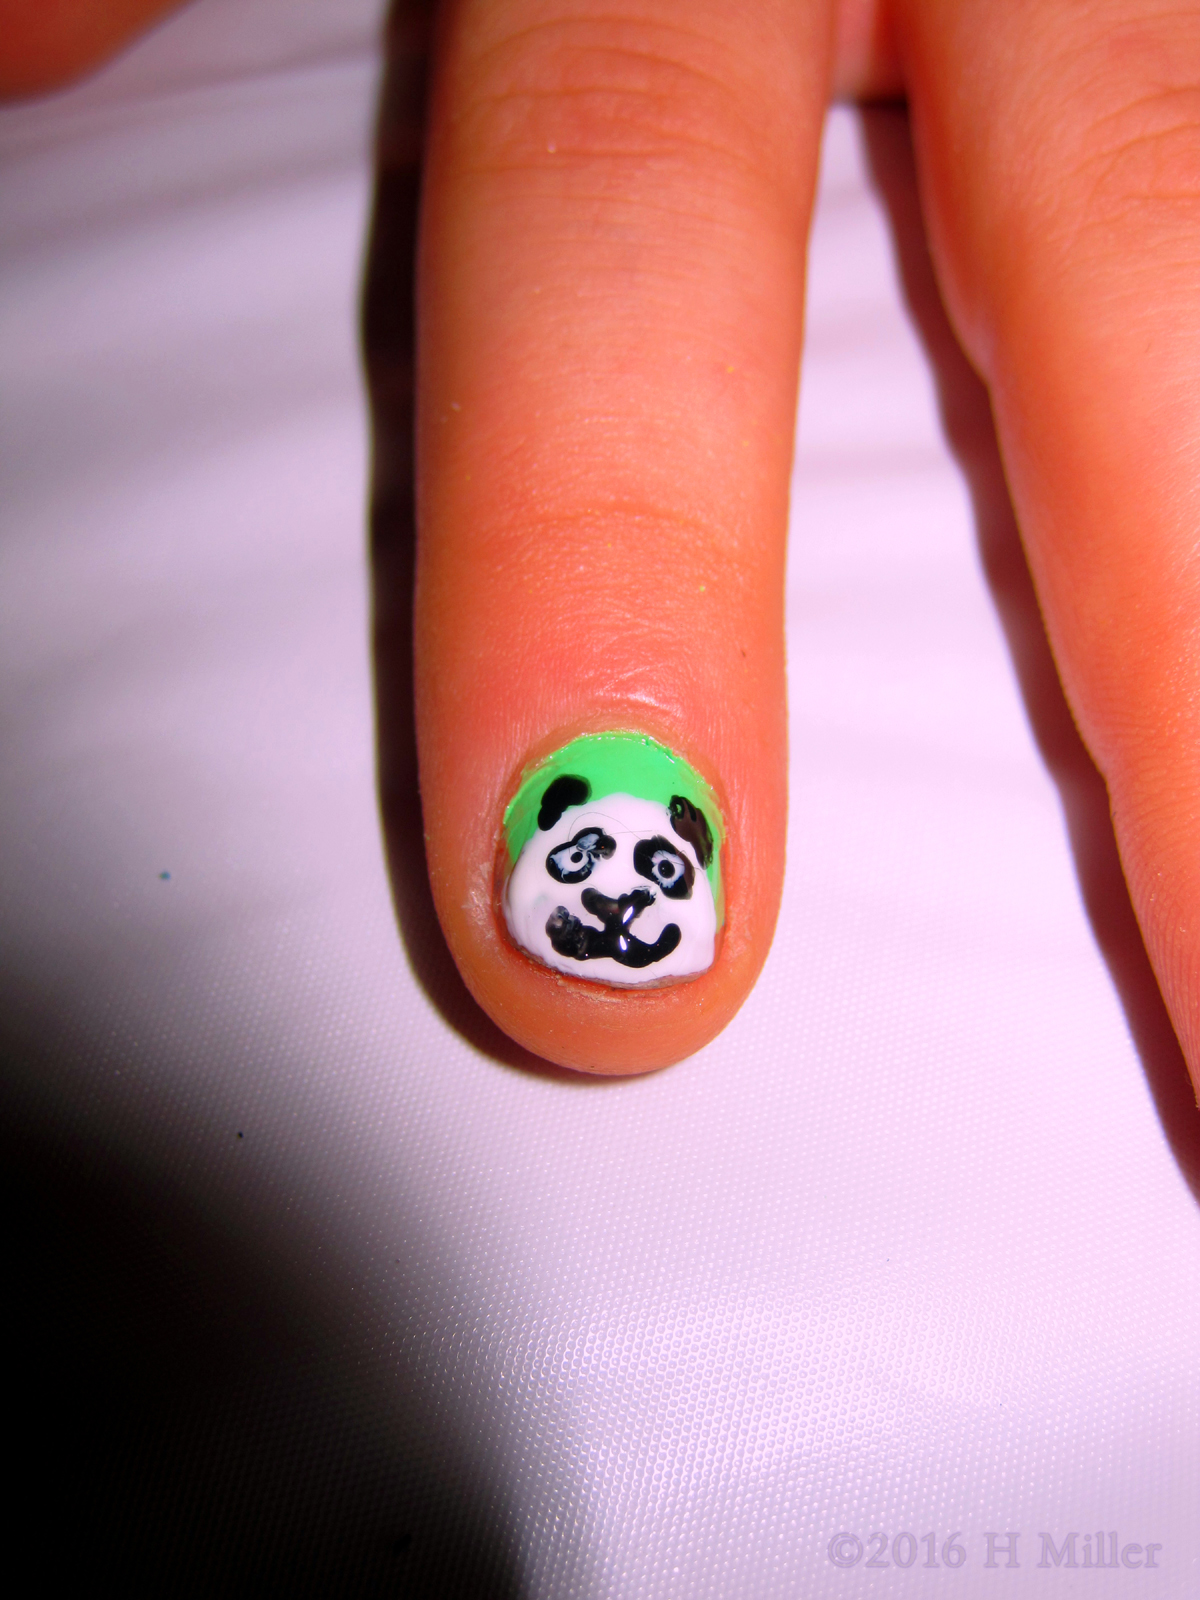 Panda Bear Nail Art Is Sooo Cute On This Girls Manicure! 